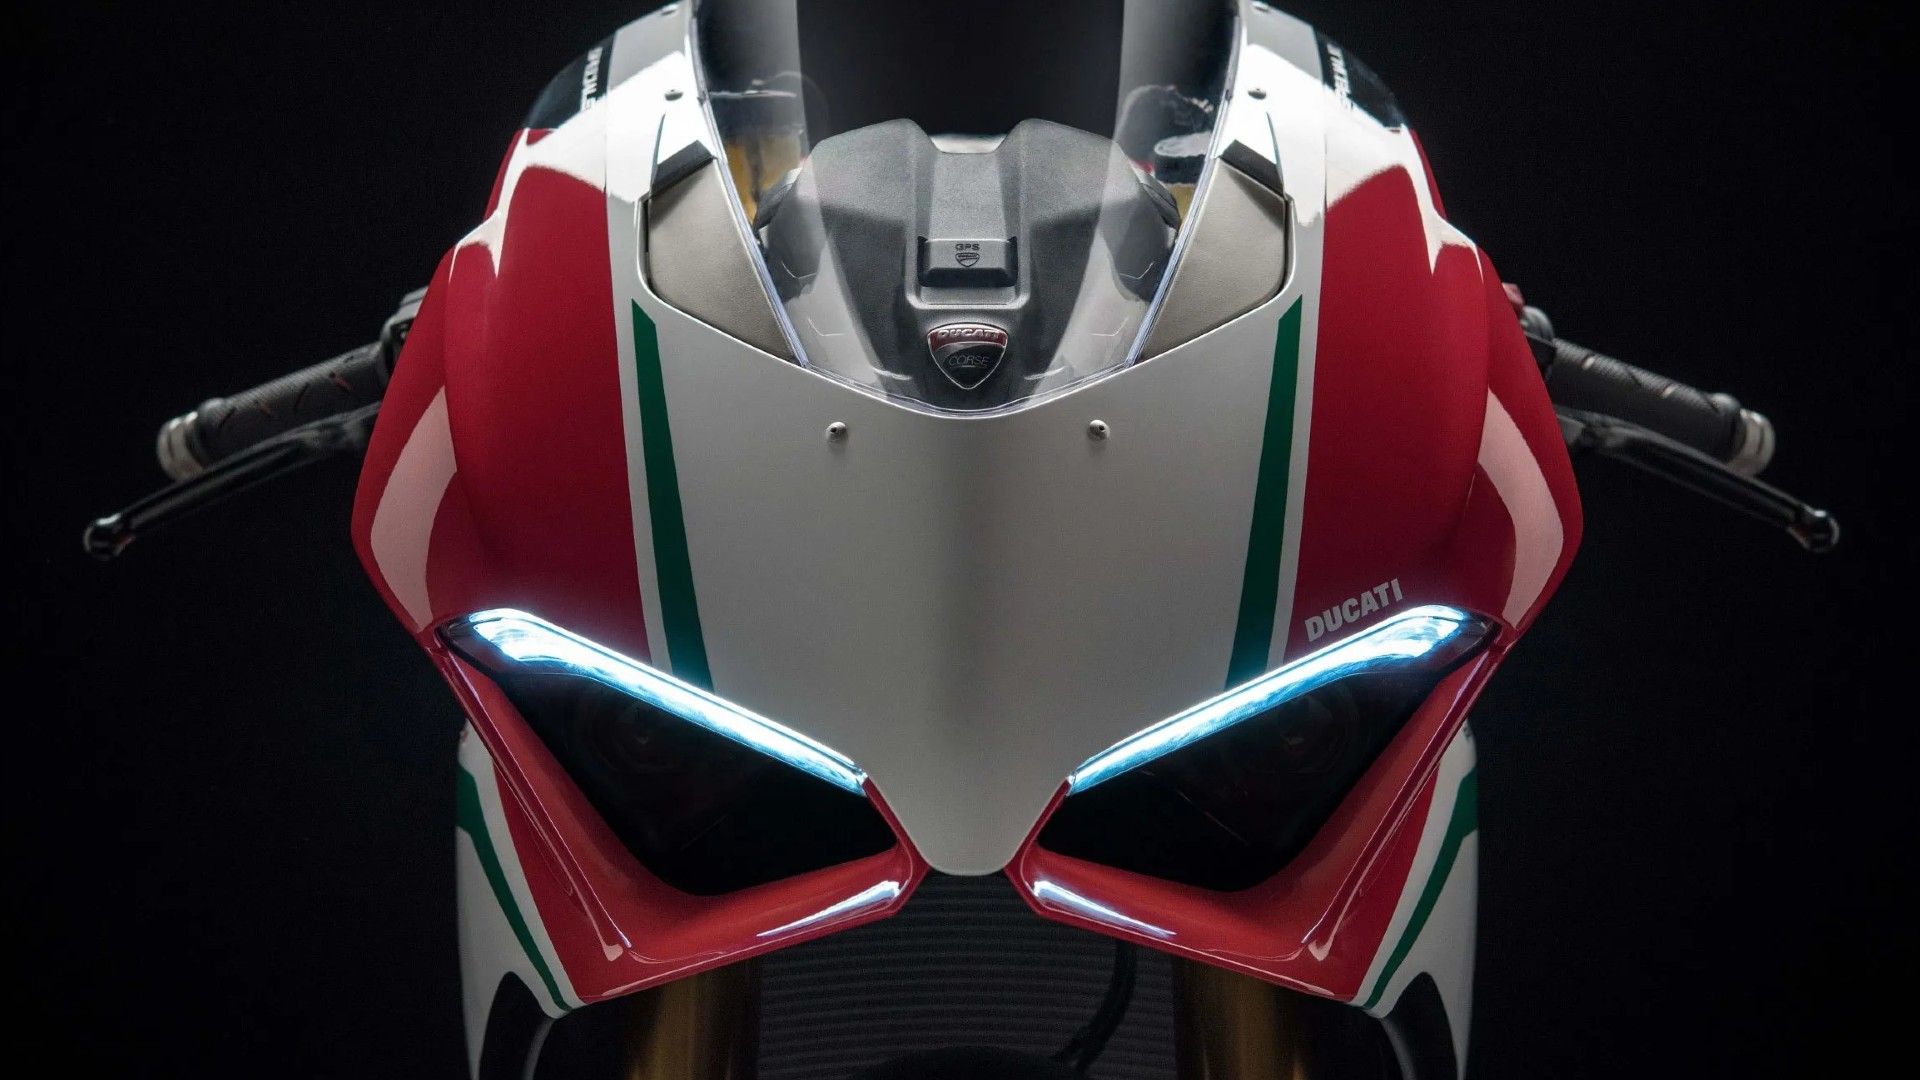 Ducati Panigale V4 Speciale Closeup